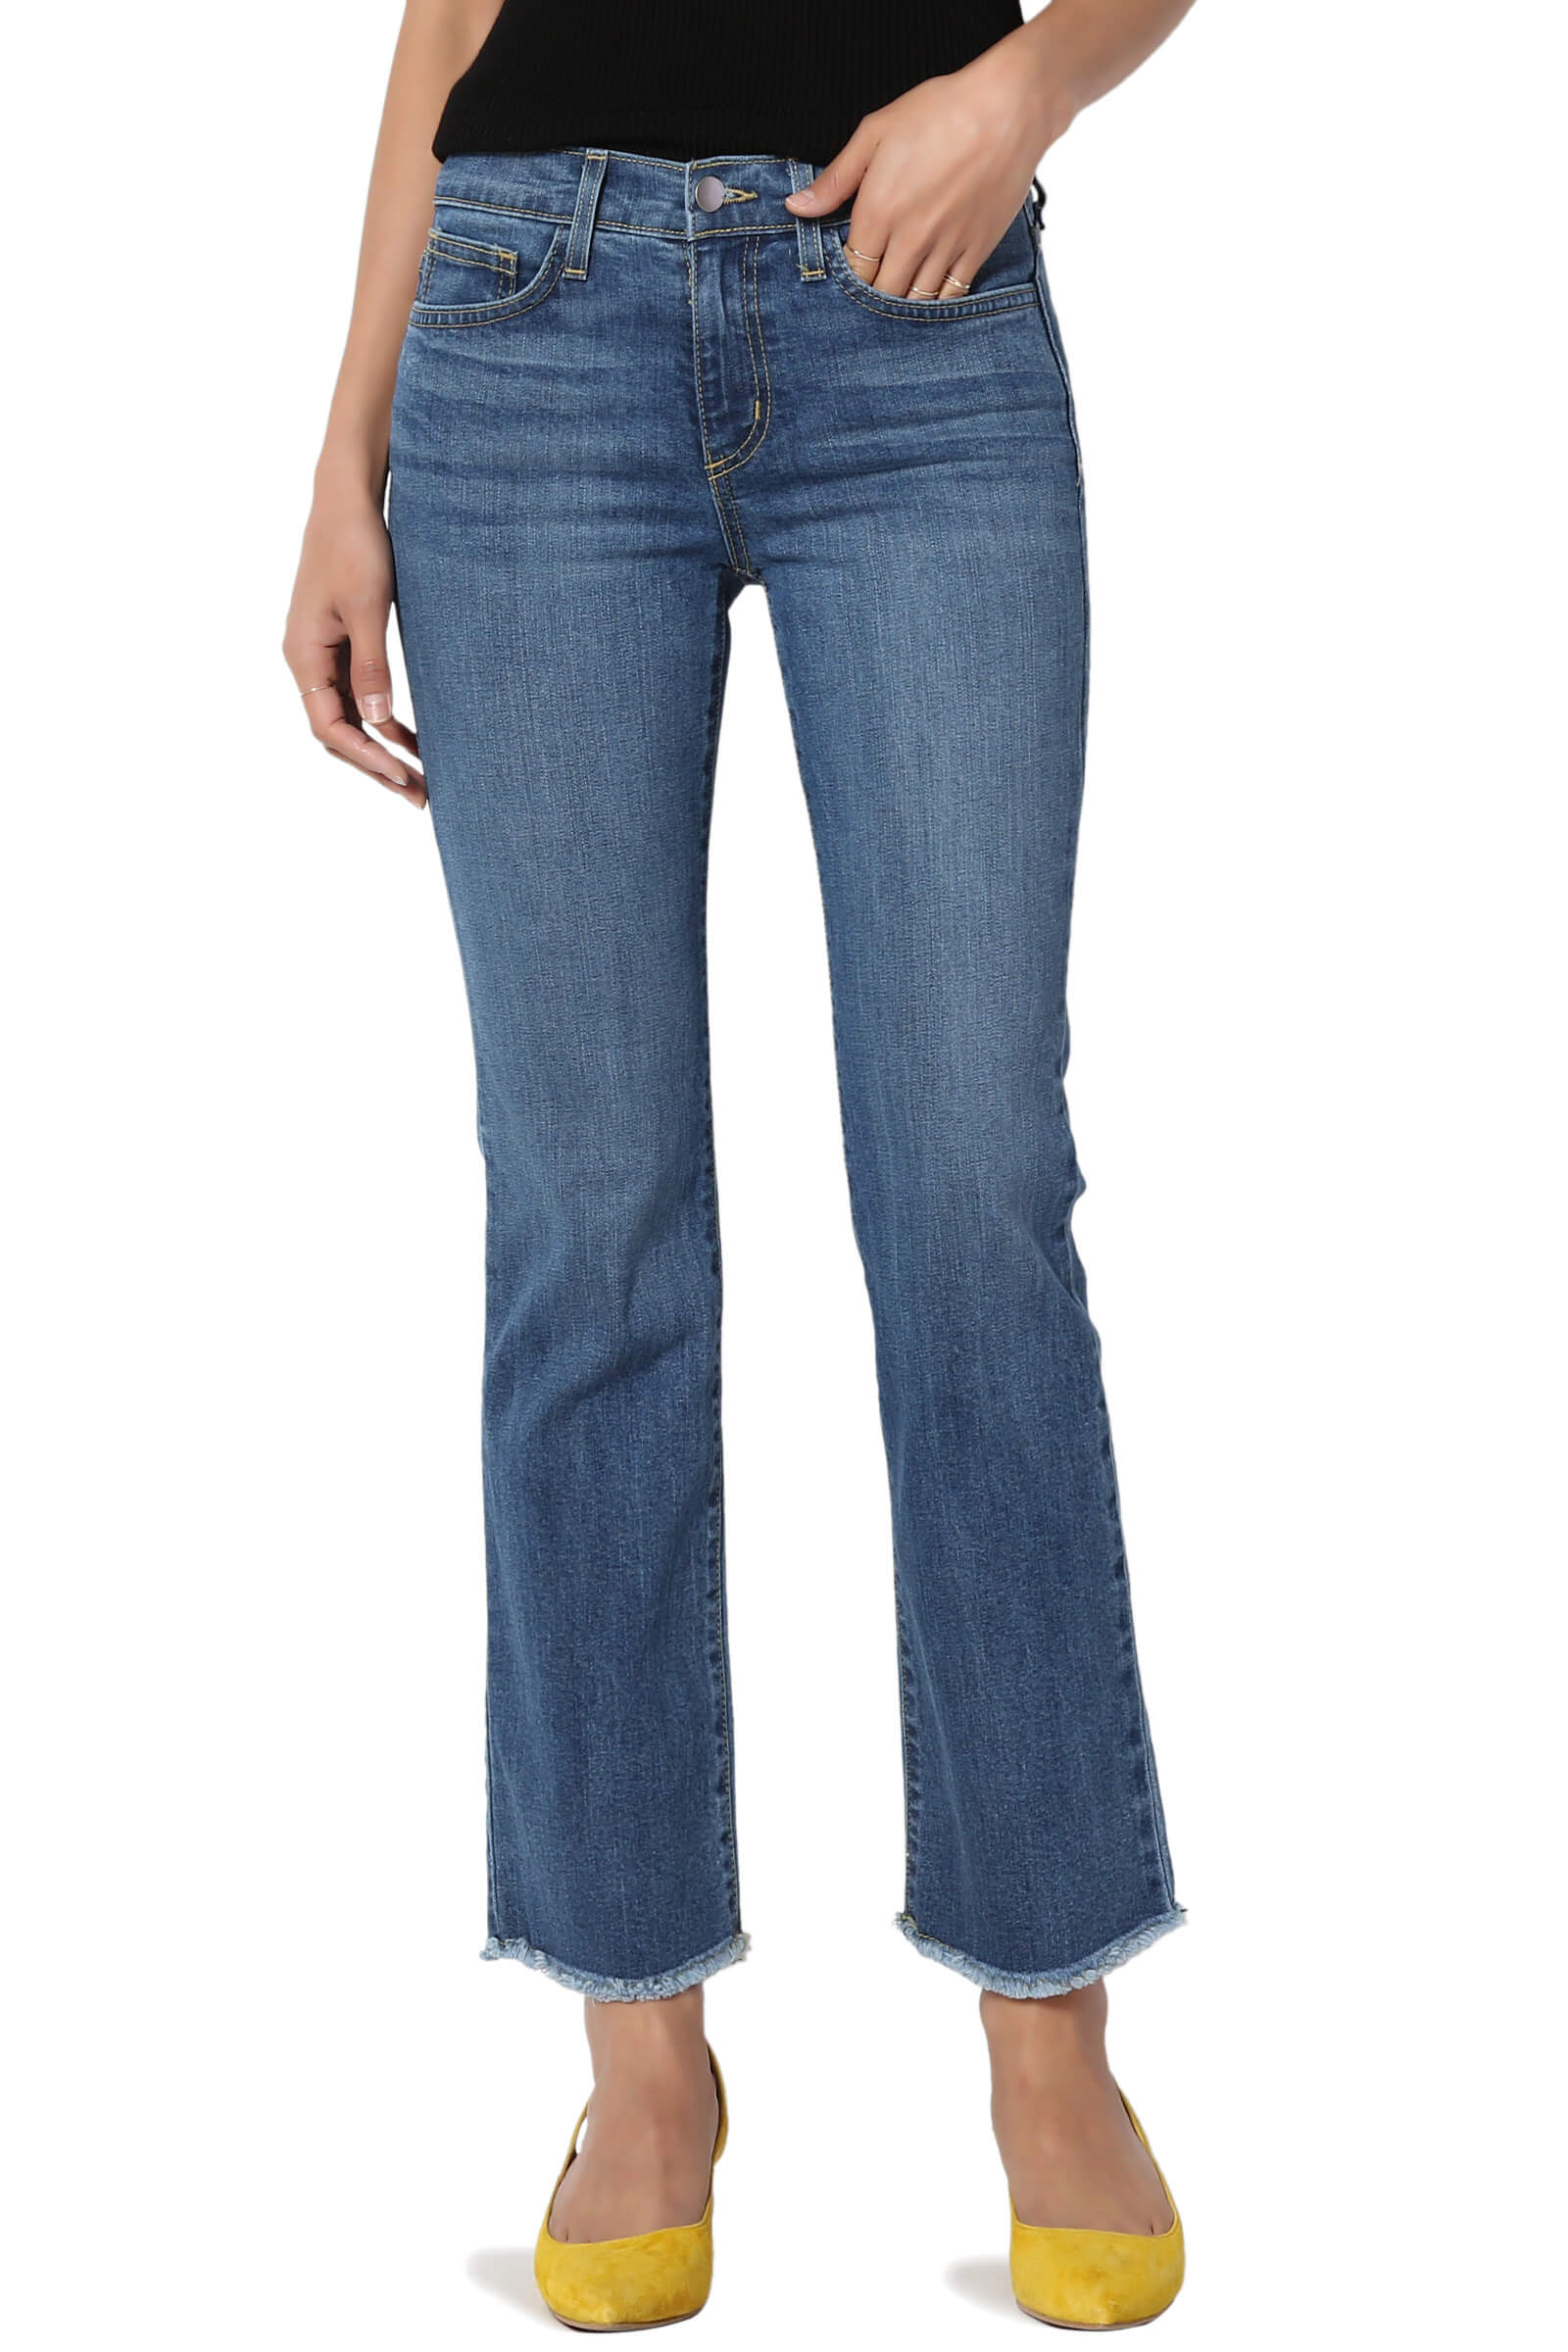 TheMogan Women's Mid Rise Crop Bootcut Jeans Slim Flare Frayed Hem Stretch Denim USA